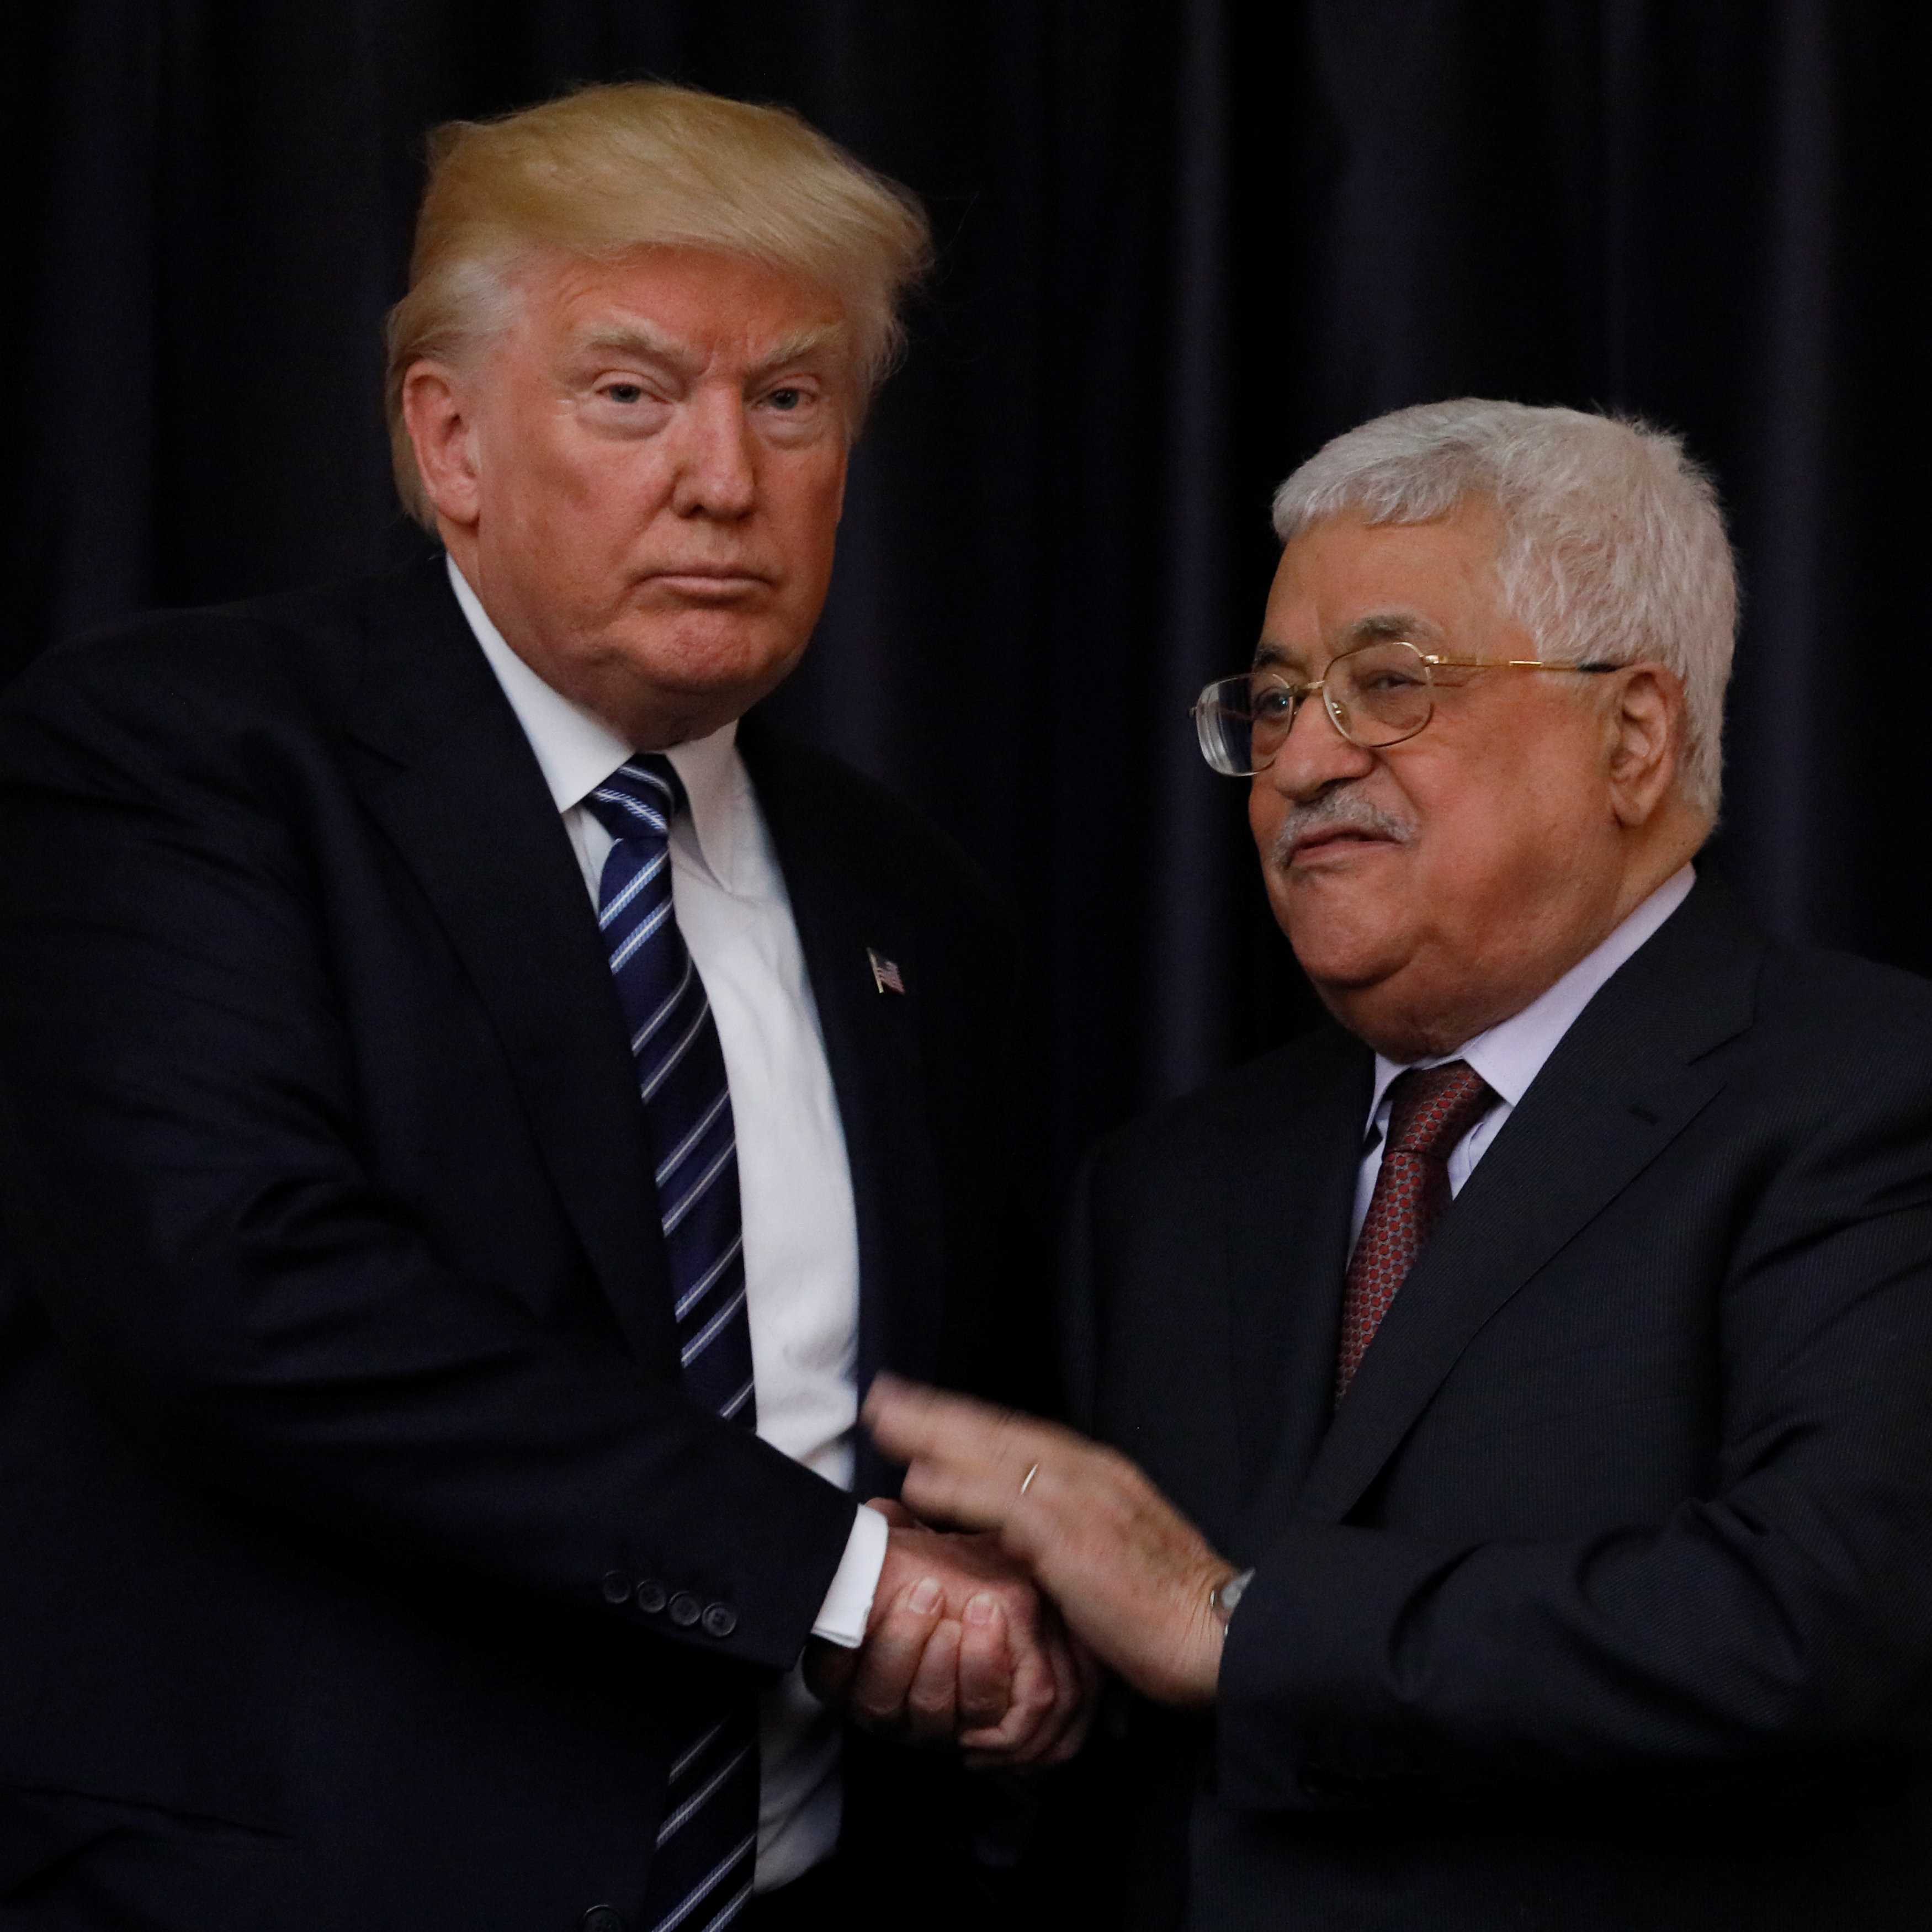 Trump İsrail-Filistin konusunda kararlı